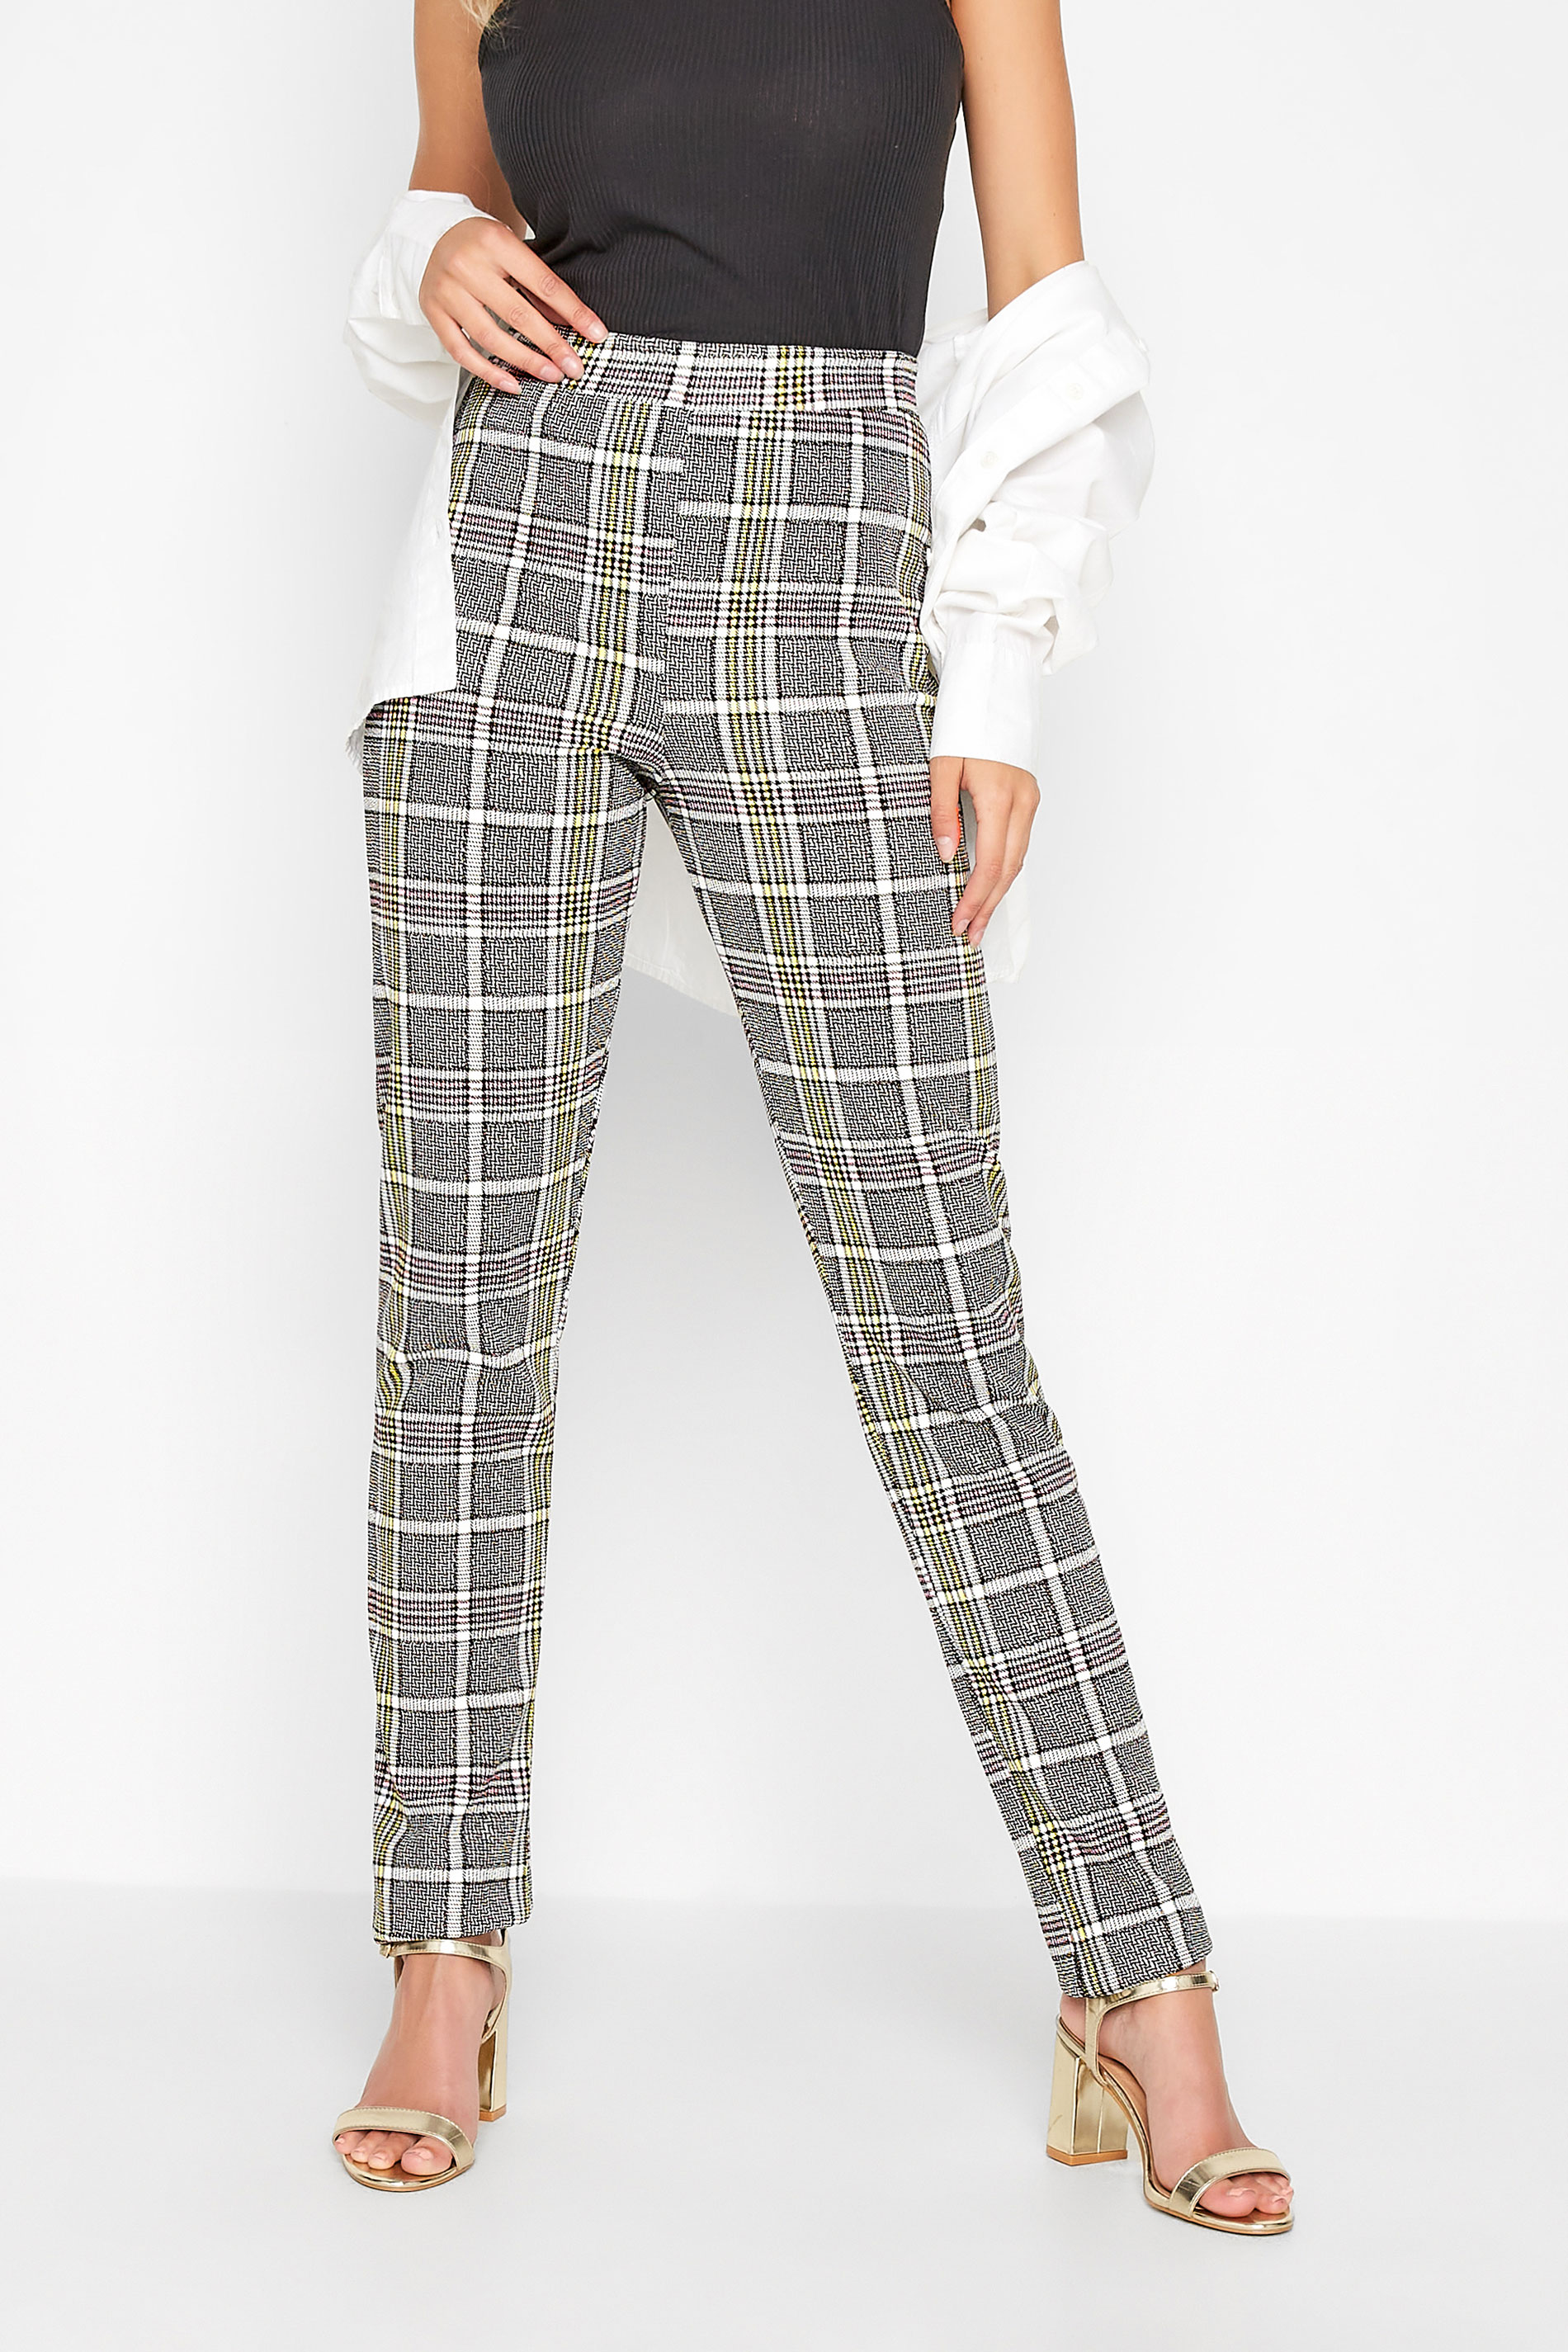 LTS Tall Women's Grey Check Print Trousers | Long Tall Sally 1